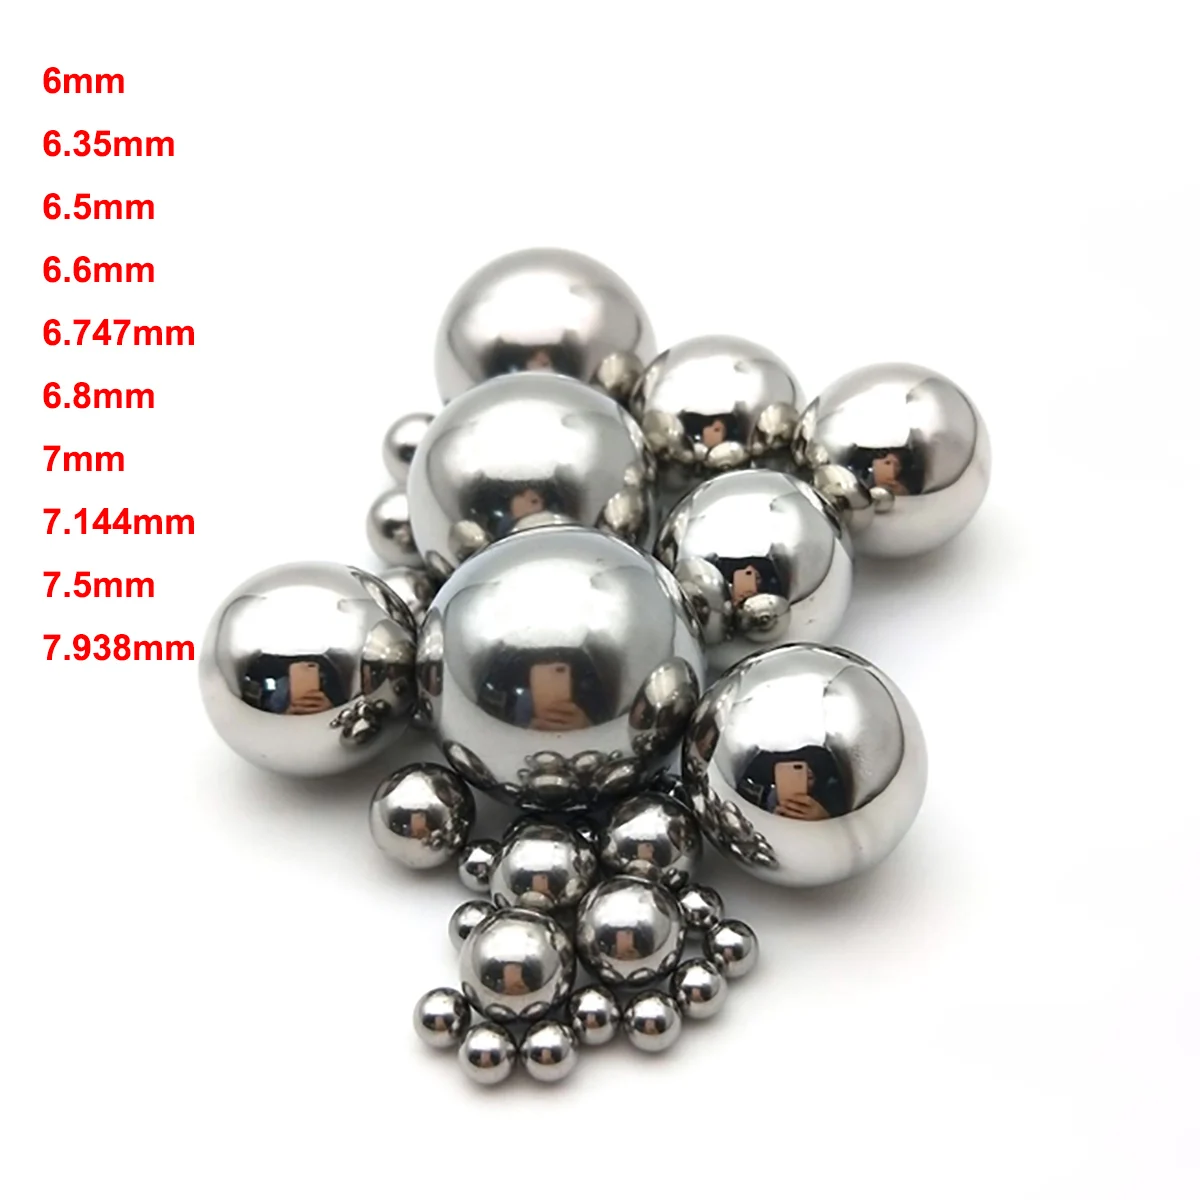 50pcs-6-635-65-66-6747-68-7-7144-75-7938mm-high-precision-bearing-balls-gcr15-bearing-steel-smooth-solid-ball